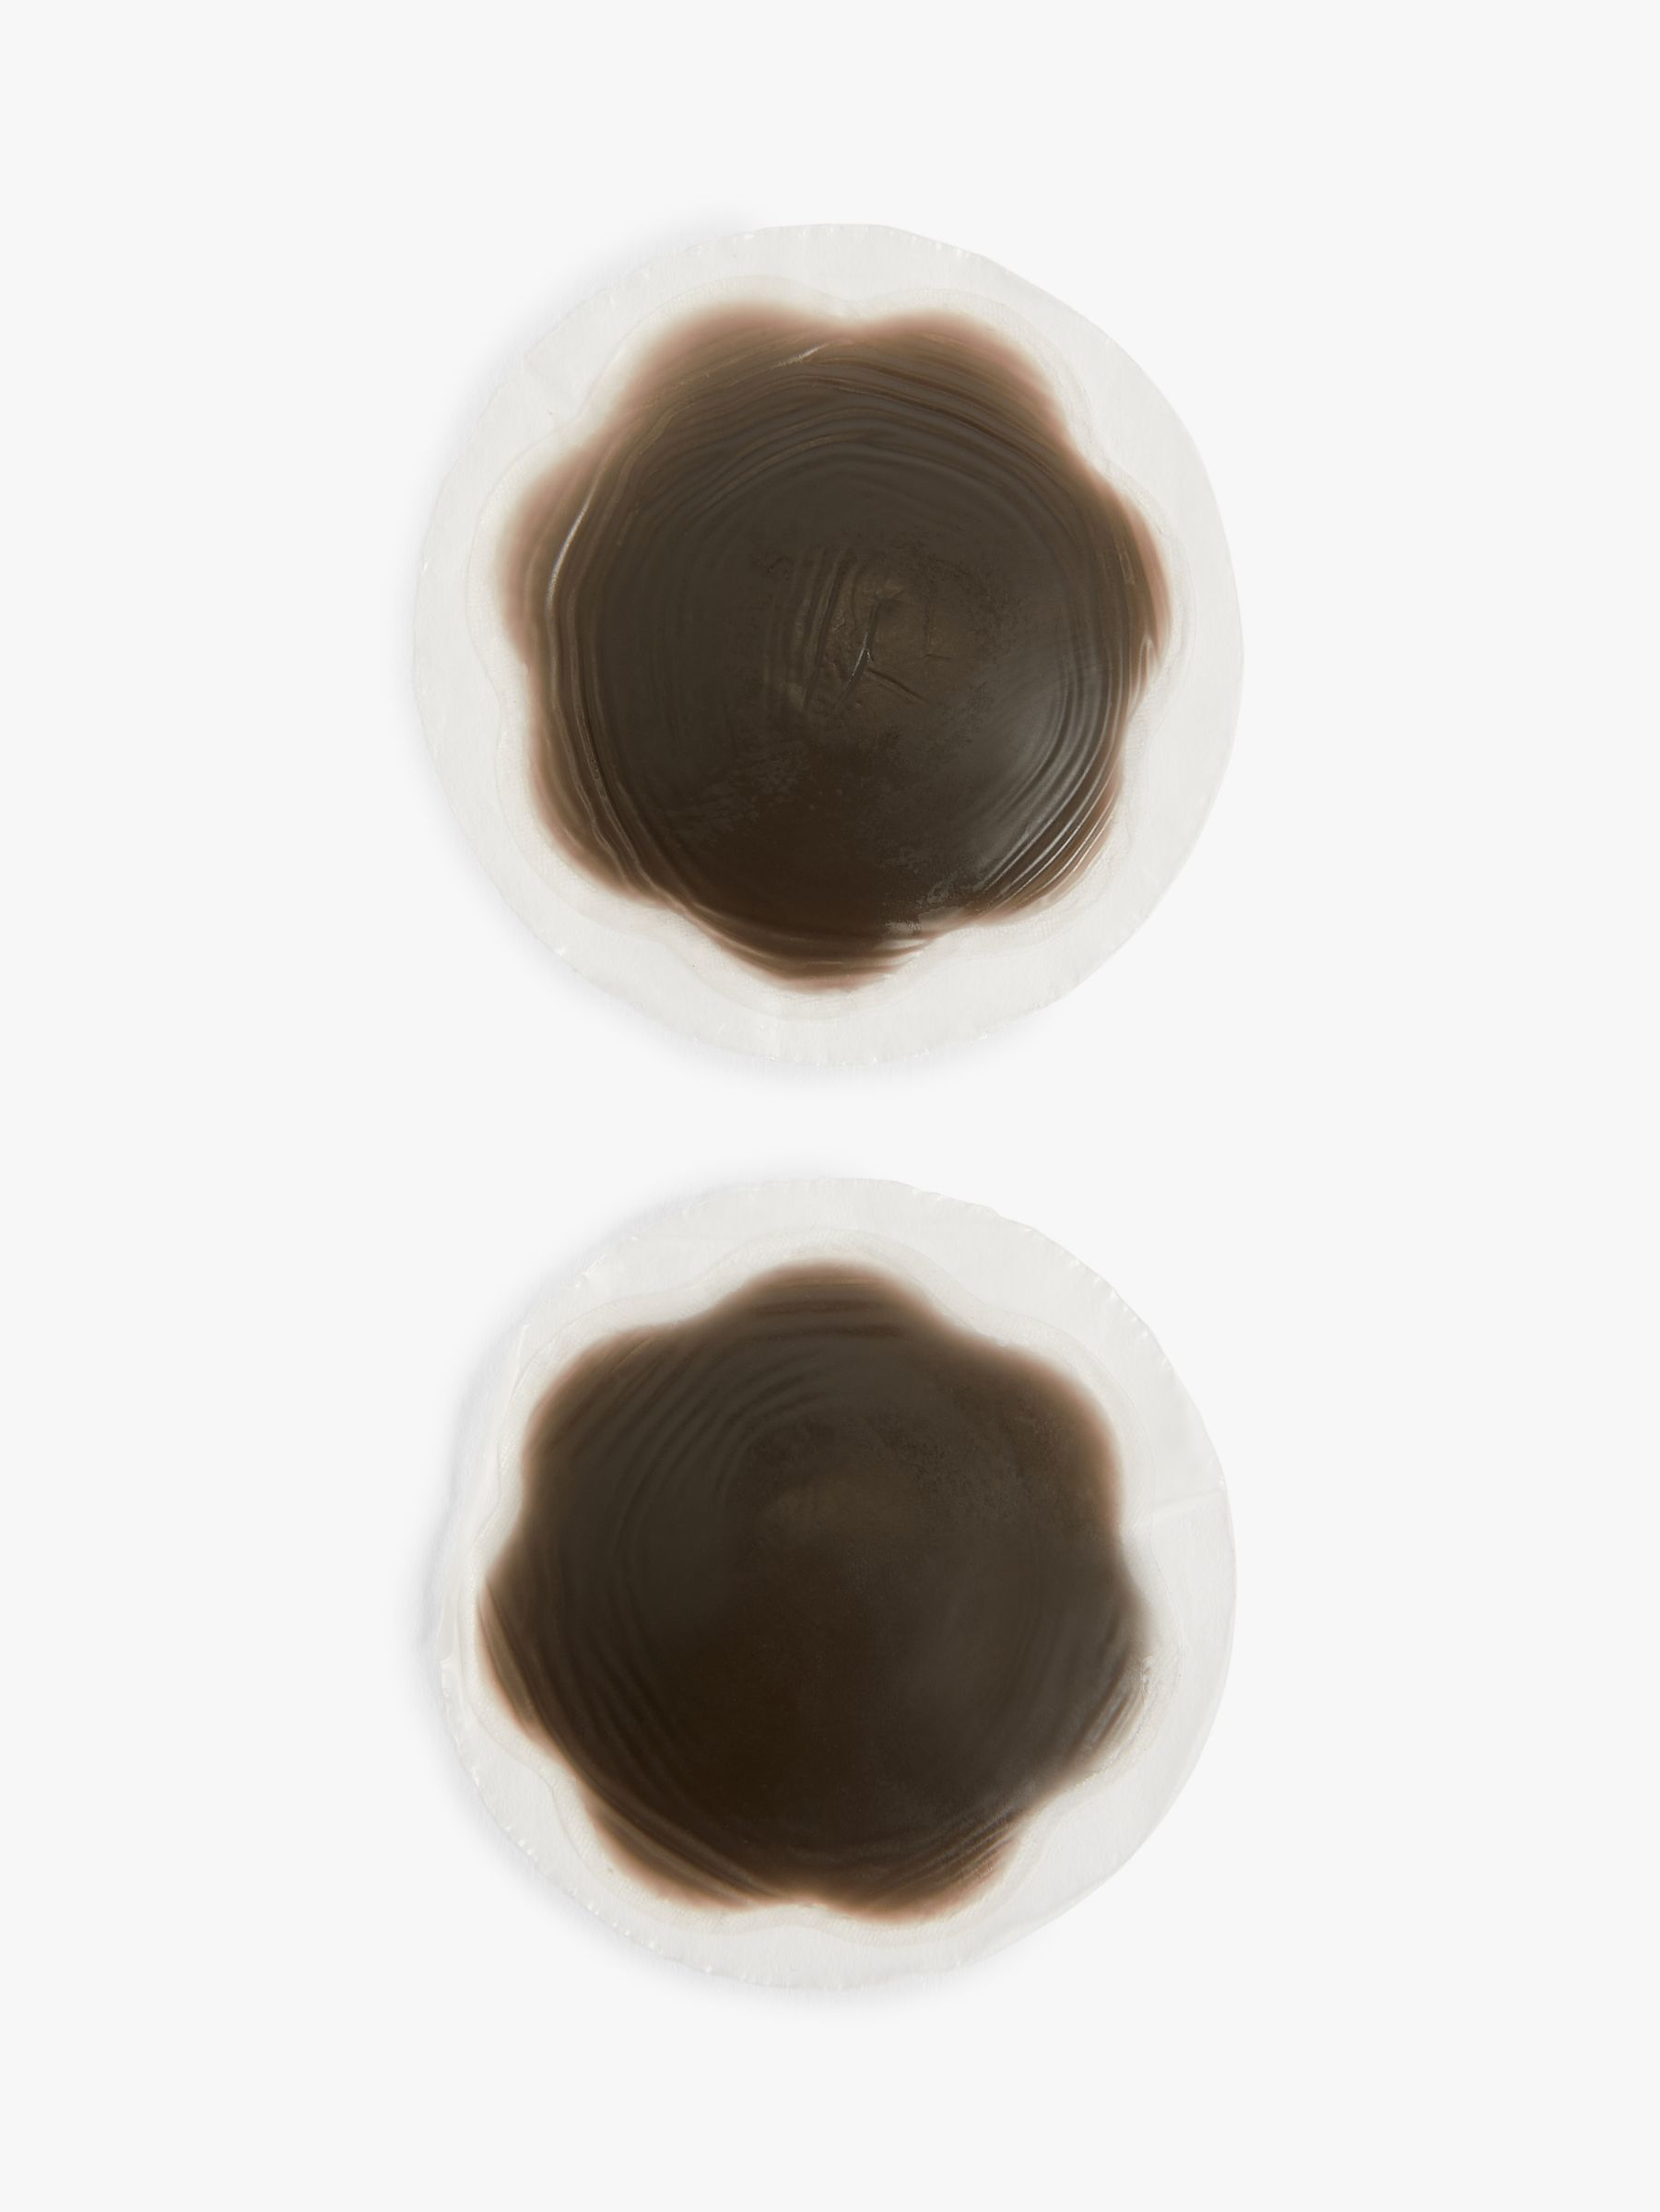 John Lewis Silicone Nipple Covers, 1 Pair, Dark Brown